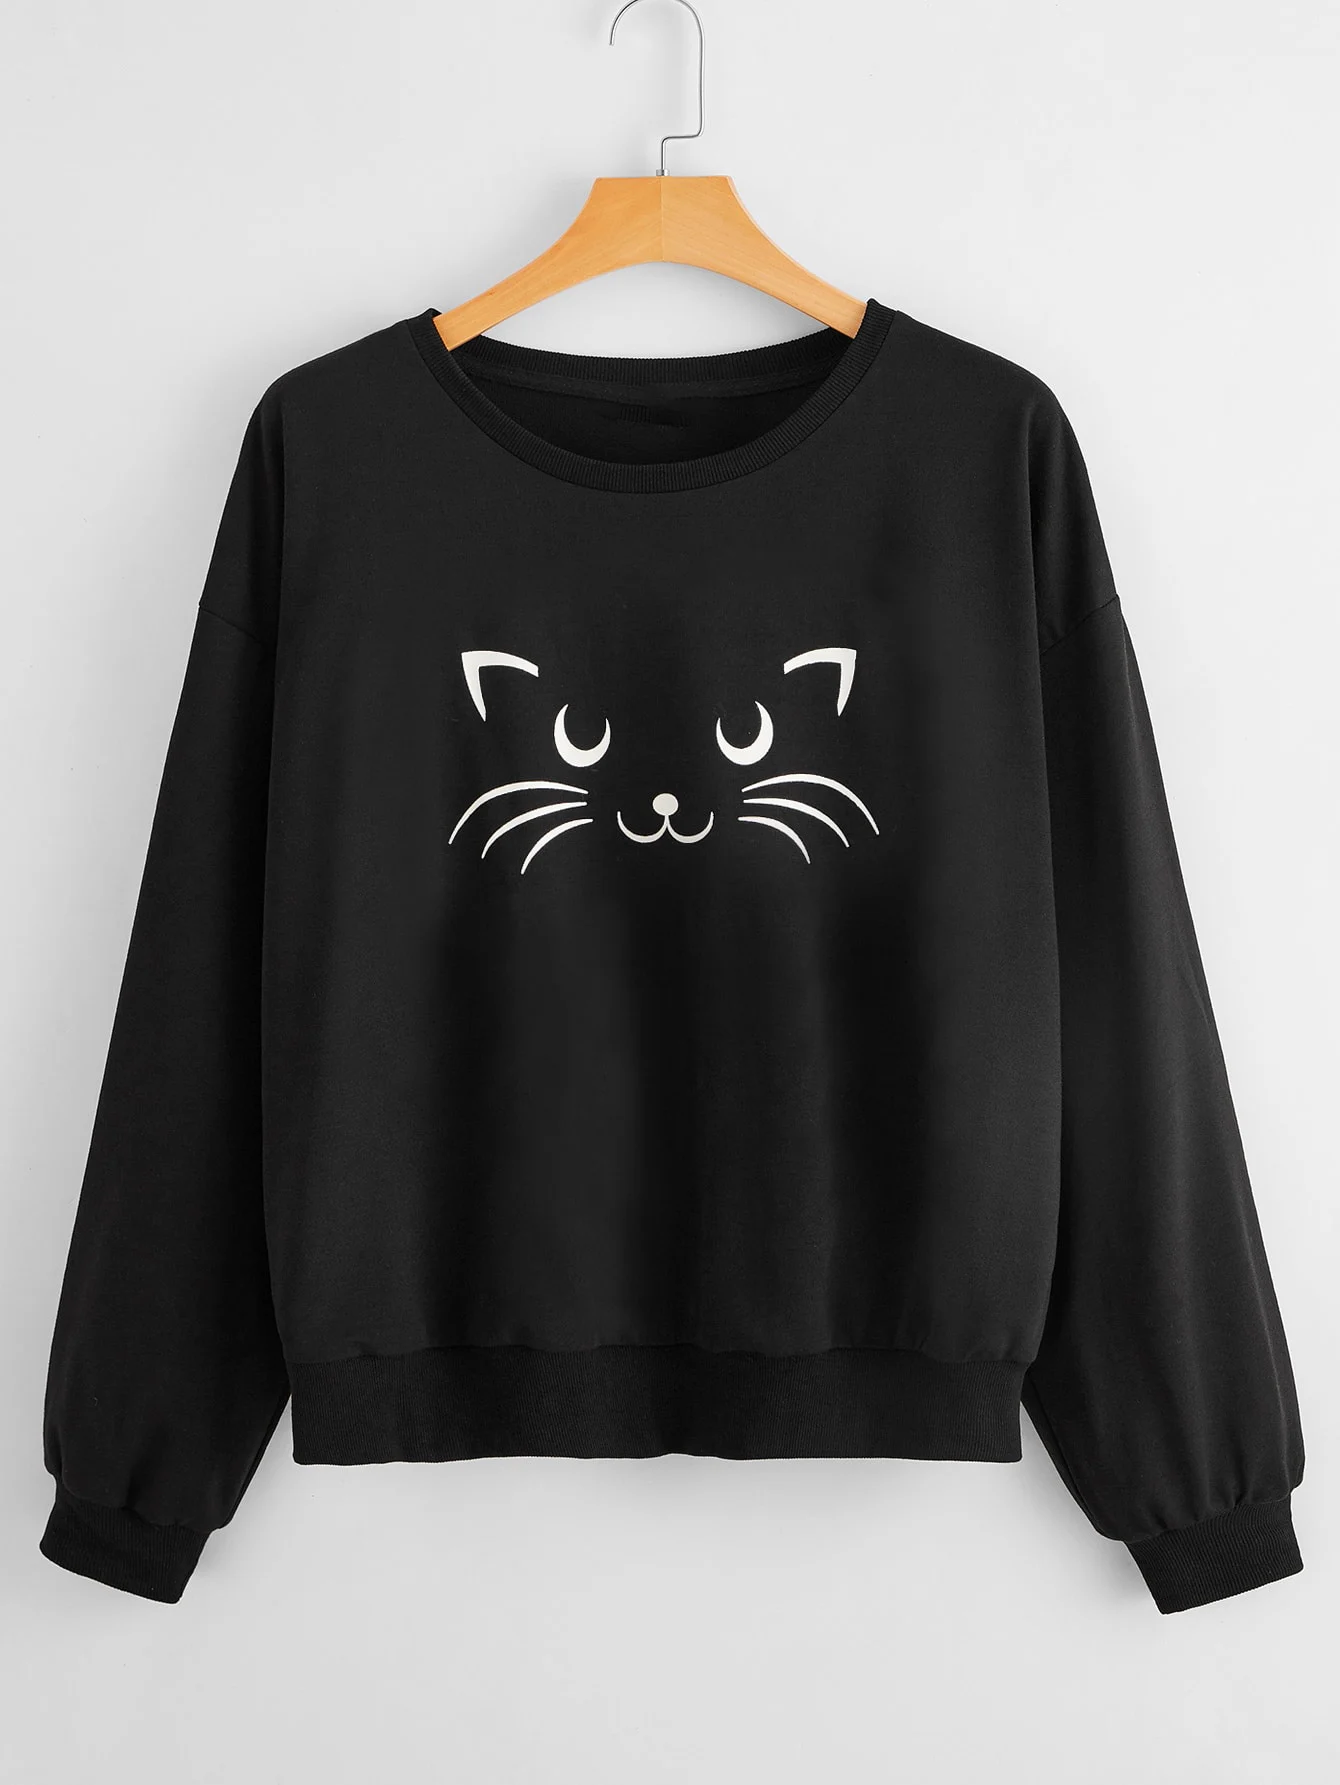 

Finjani Women's Plus Size Cute Cat Face Print Pullover Sweatshirt,black Long Sleeve Crew Neck Sweatshirt, Women's Clothing